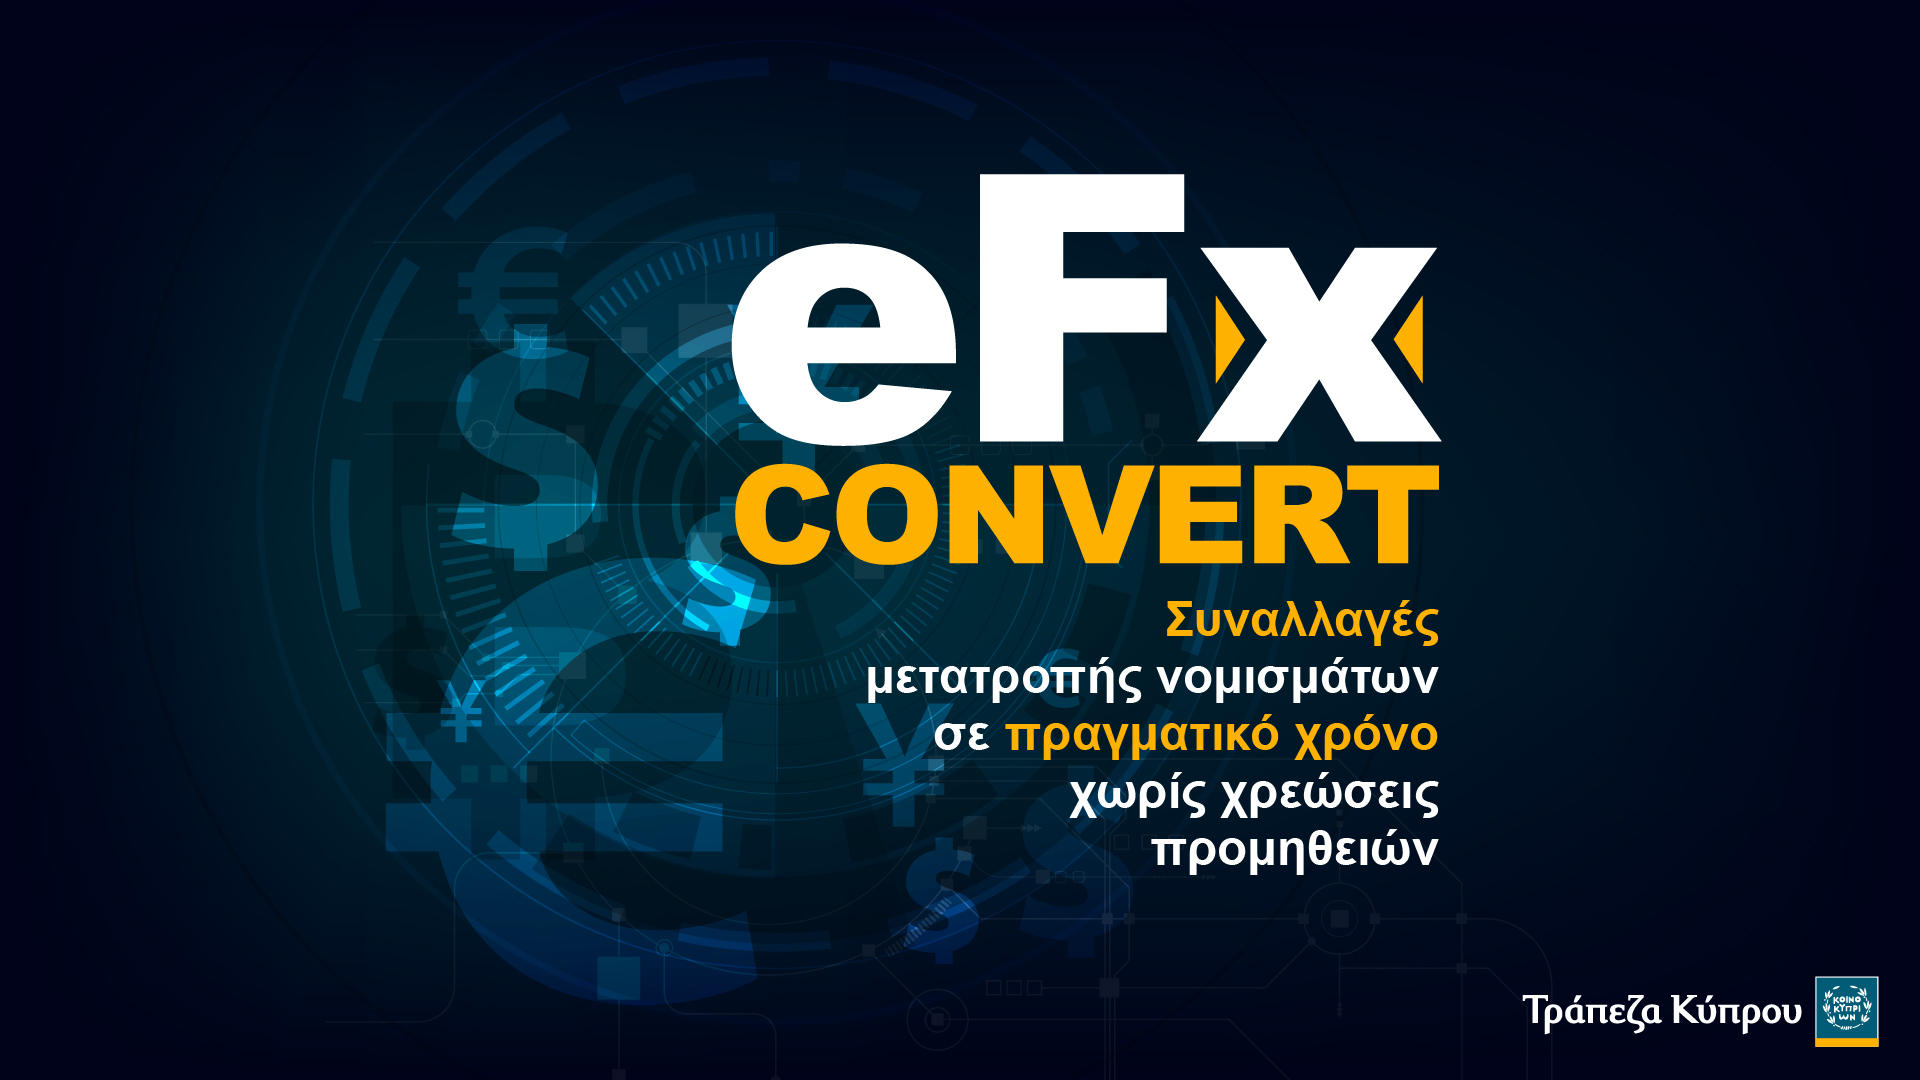 EFX Service Press Release banner.final